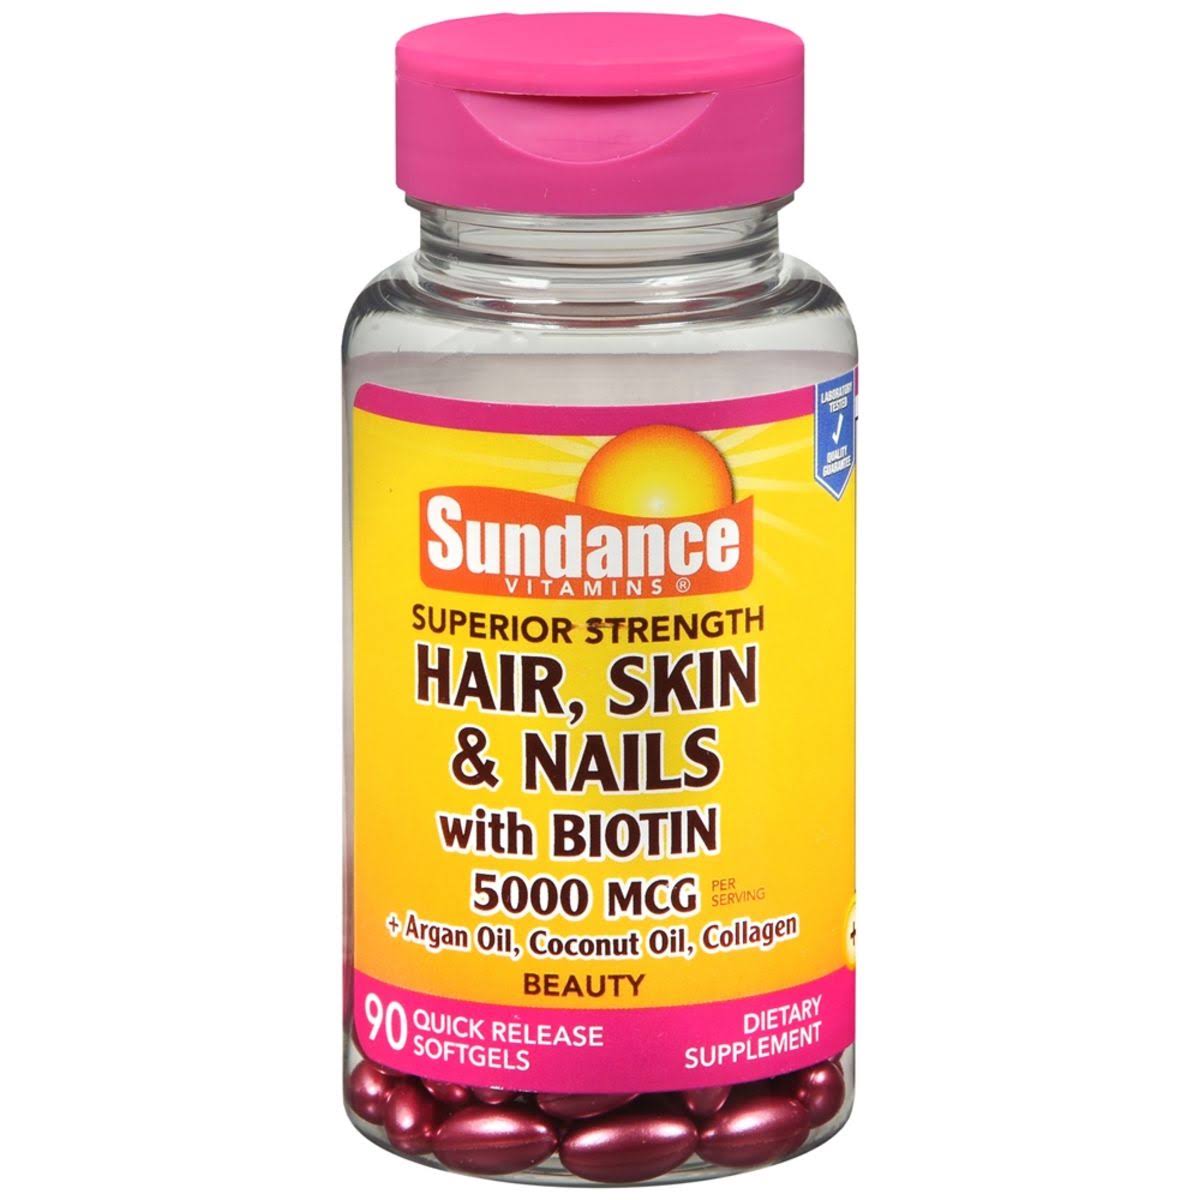 Sundance Hair, Skin & Nails with Biotin 5000 MCG